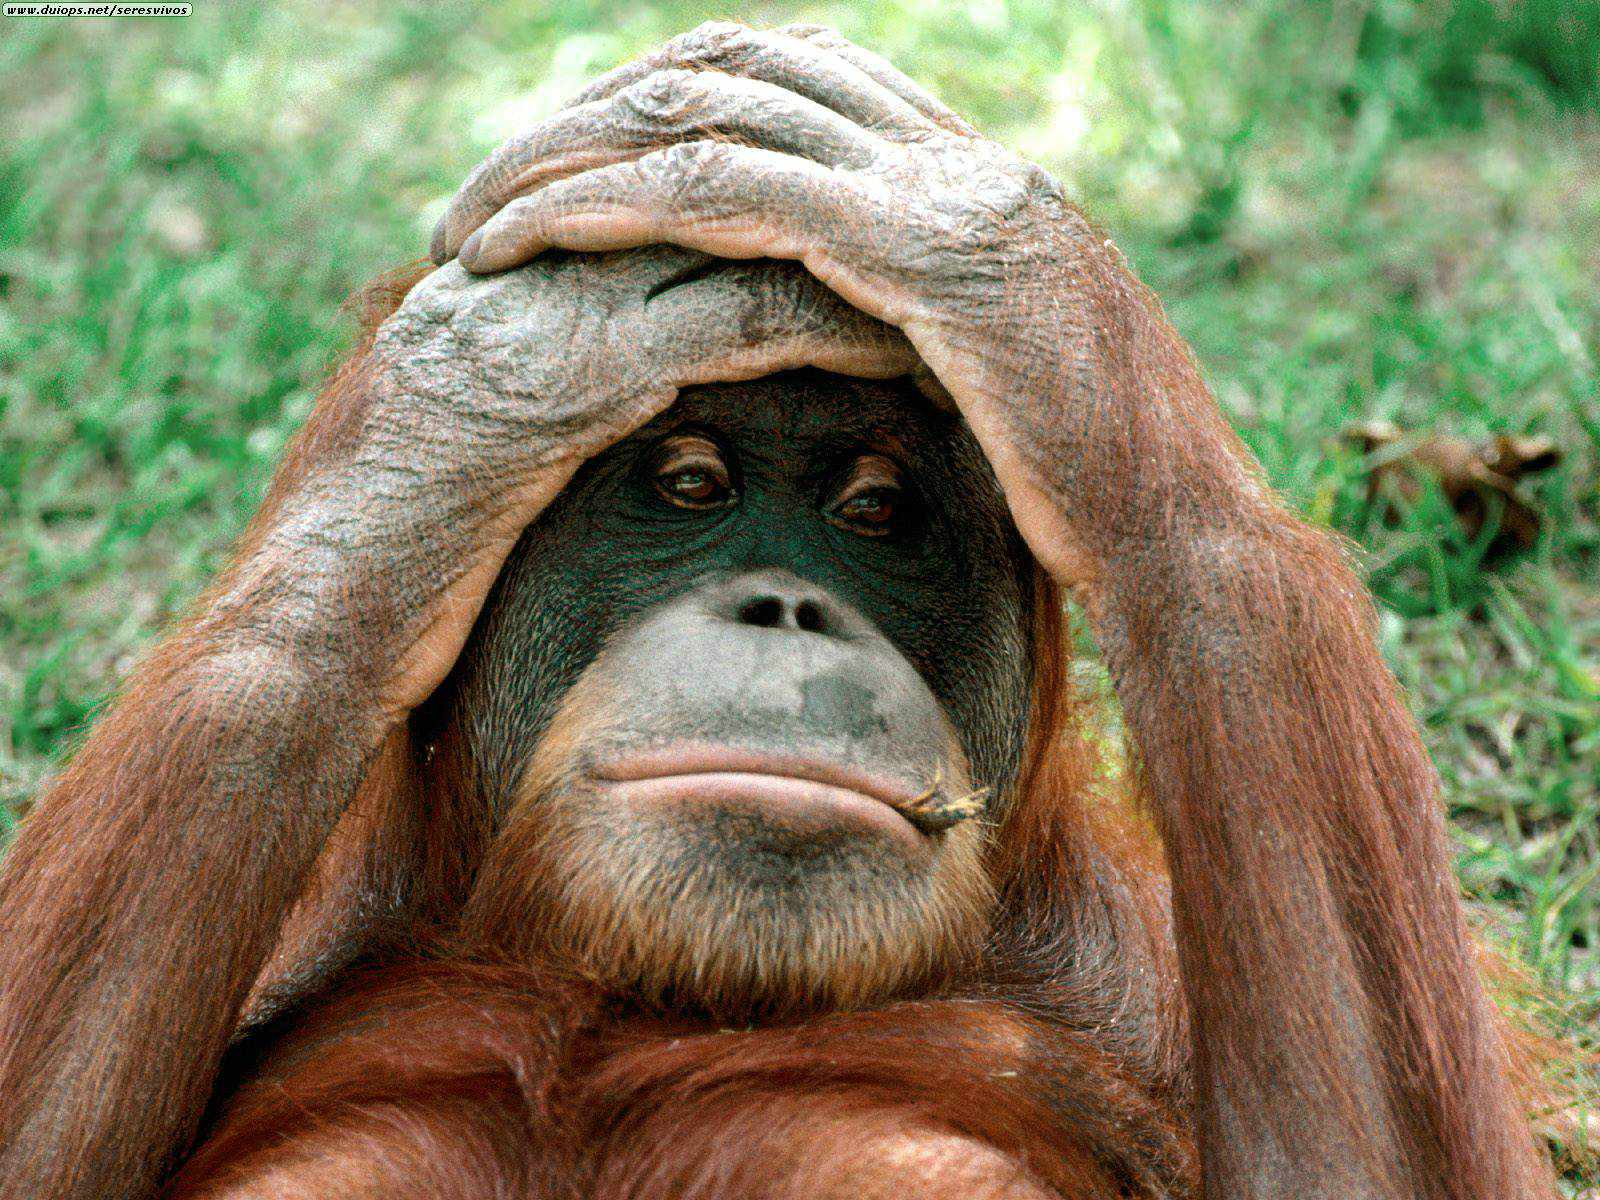 Monkeys - Orangutans hands on head | END Trophy Hunting NOW